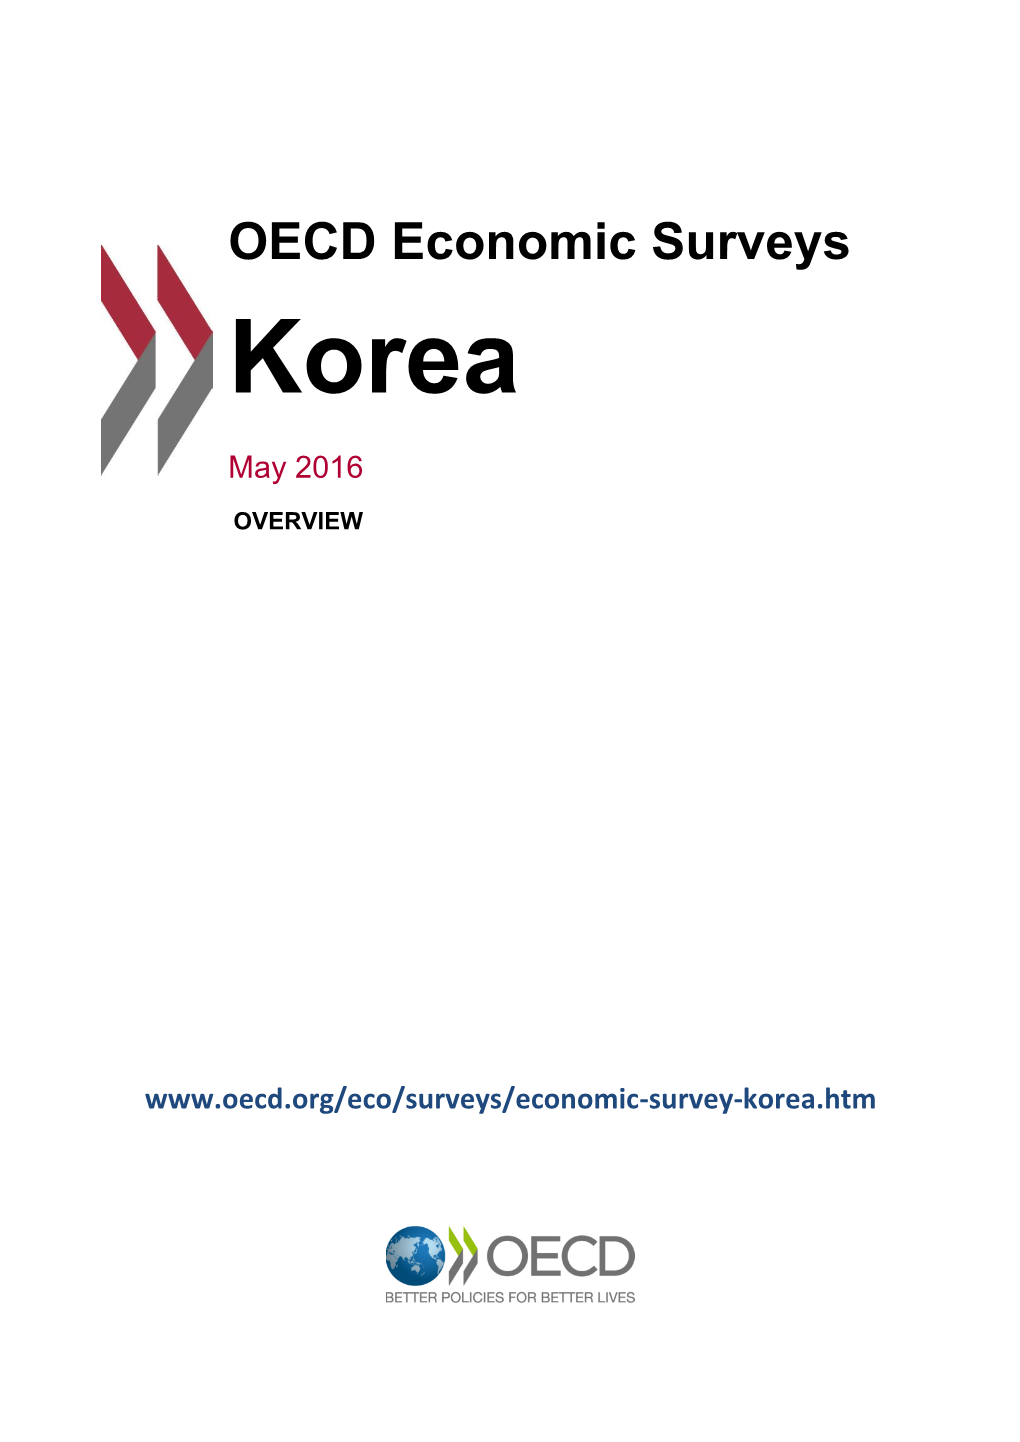 OECD Economic Surveys: Korea© OECD 2016